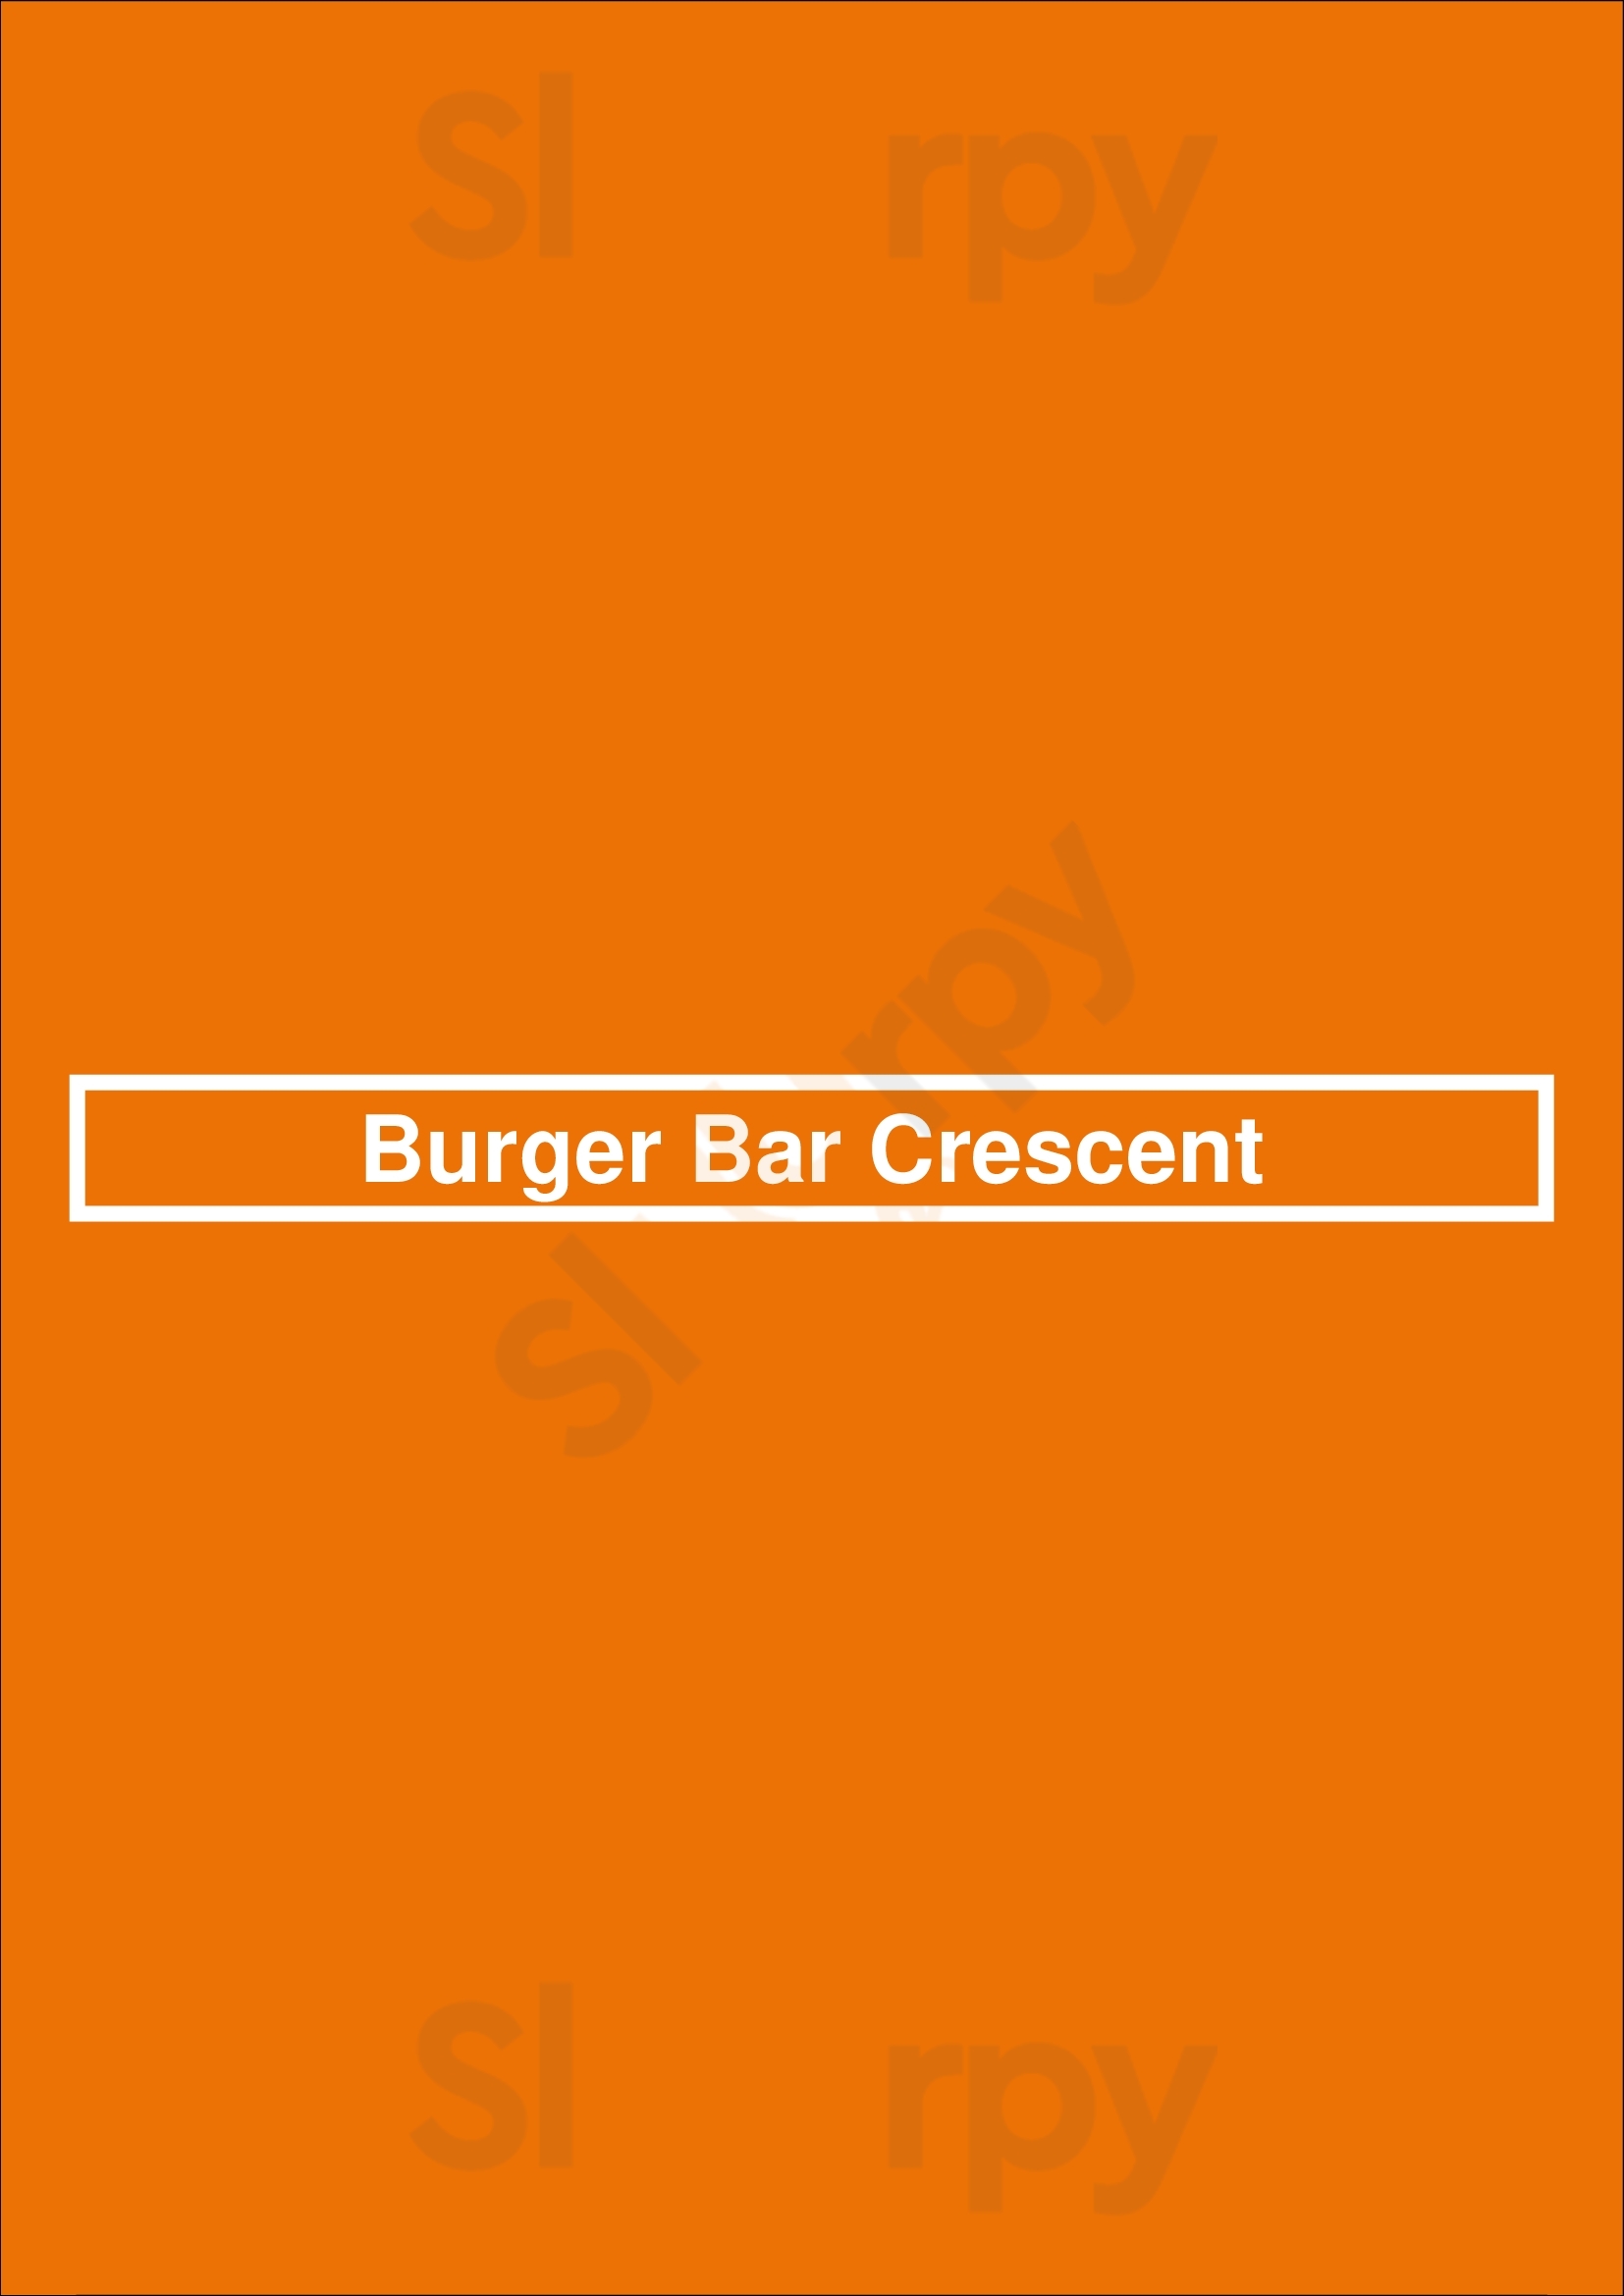 Burger Bar Crescent Montreal Menu - 1